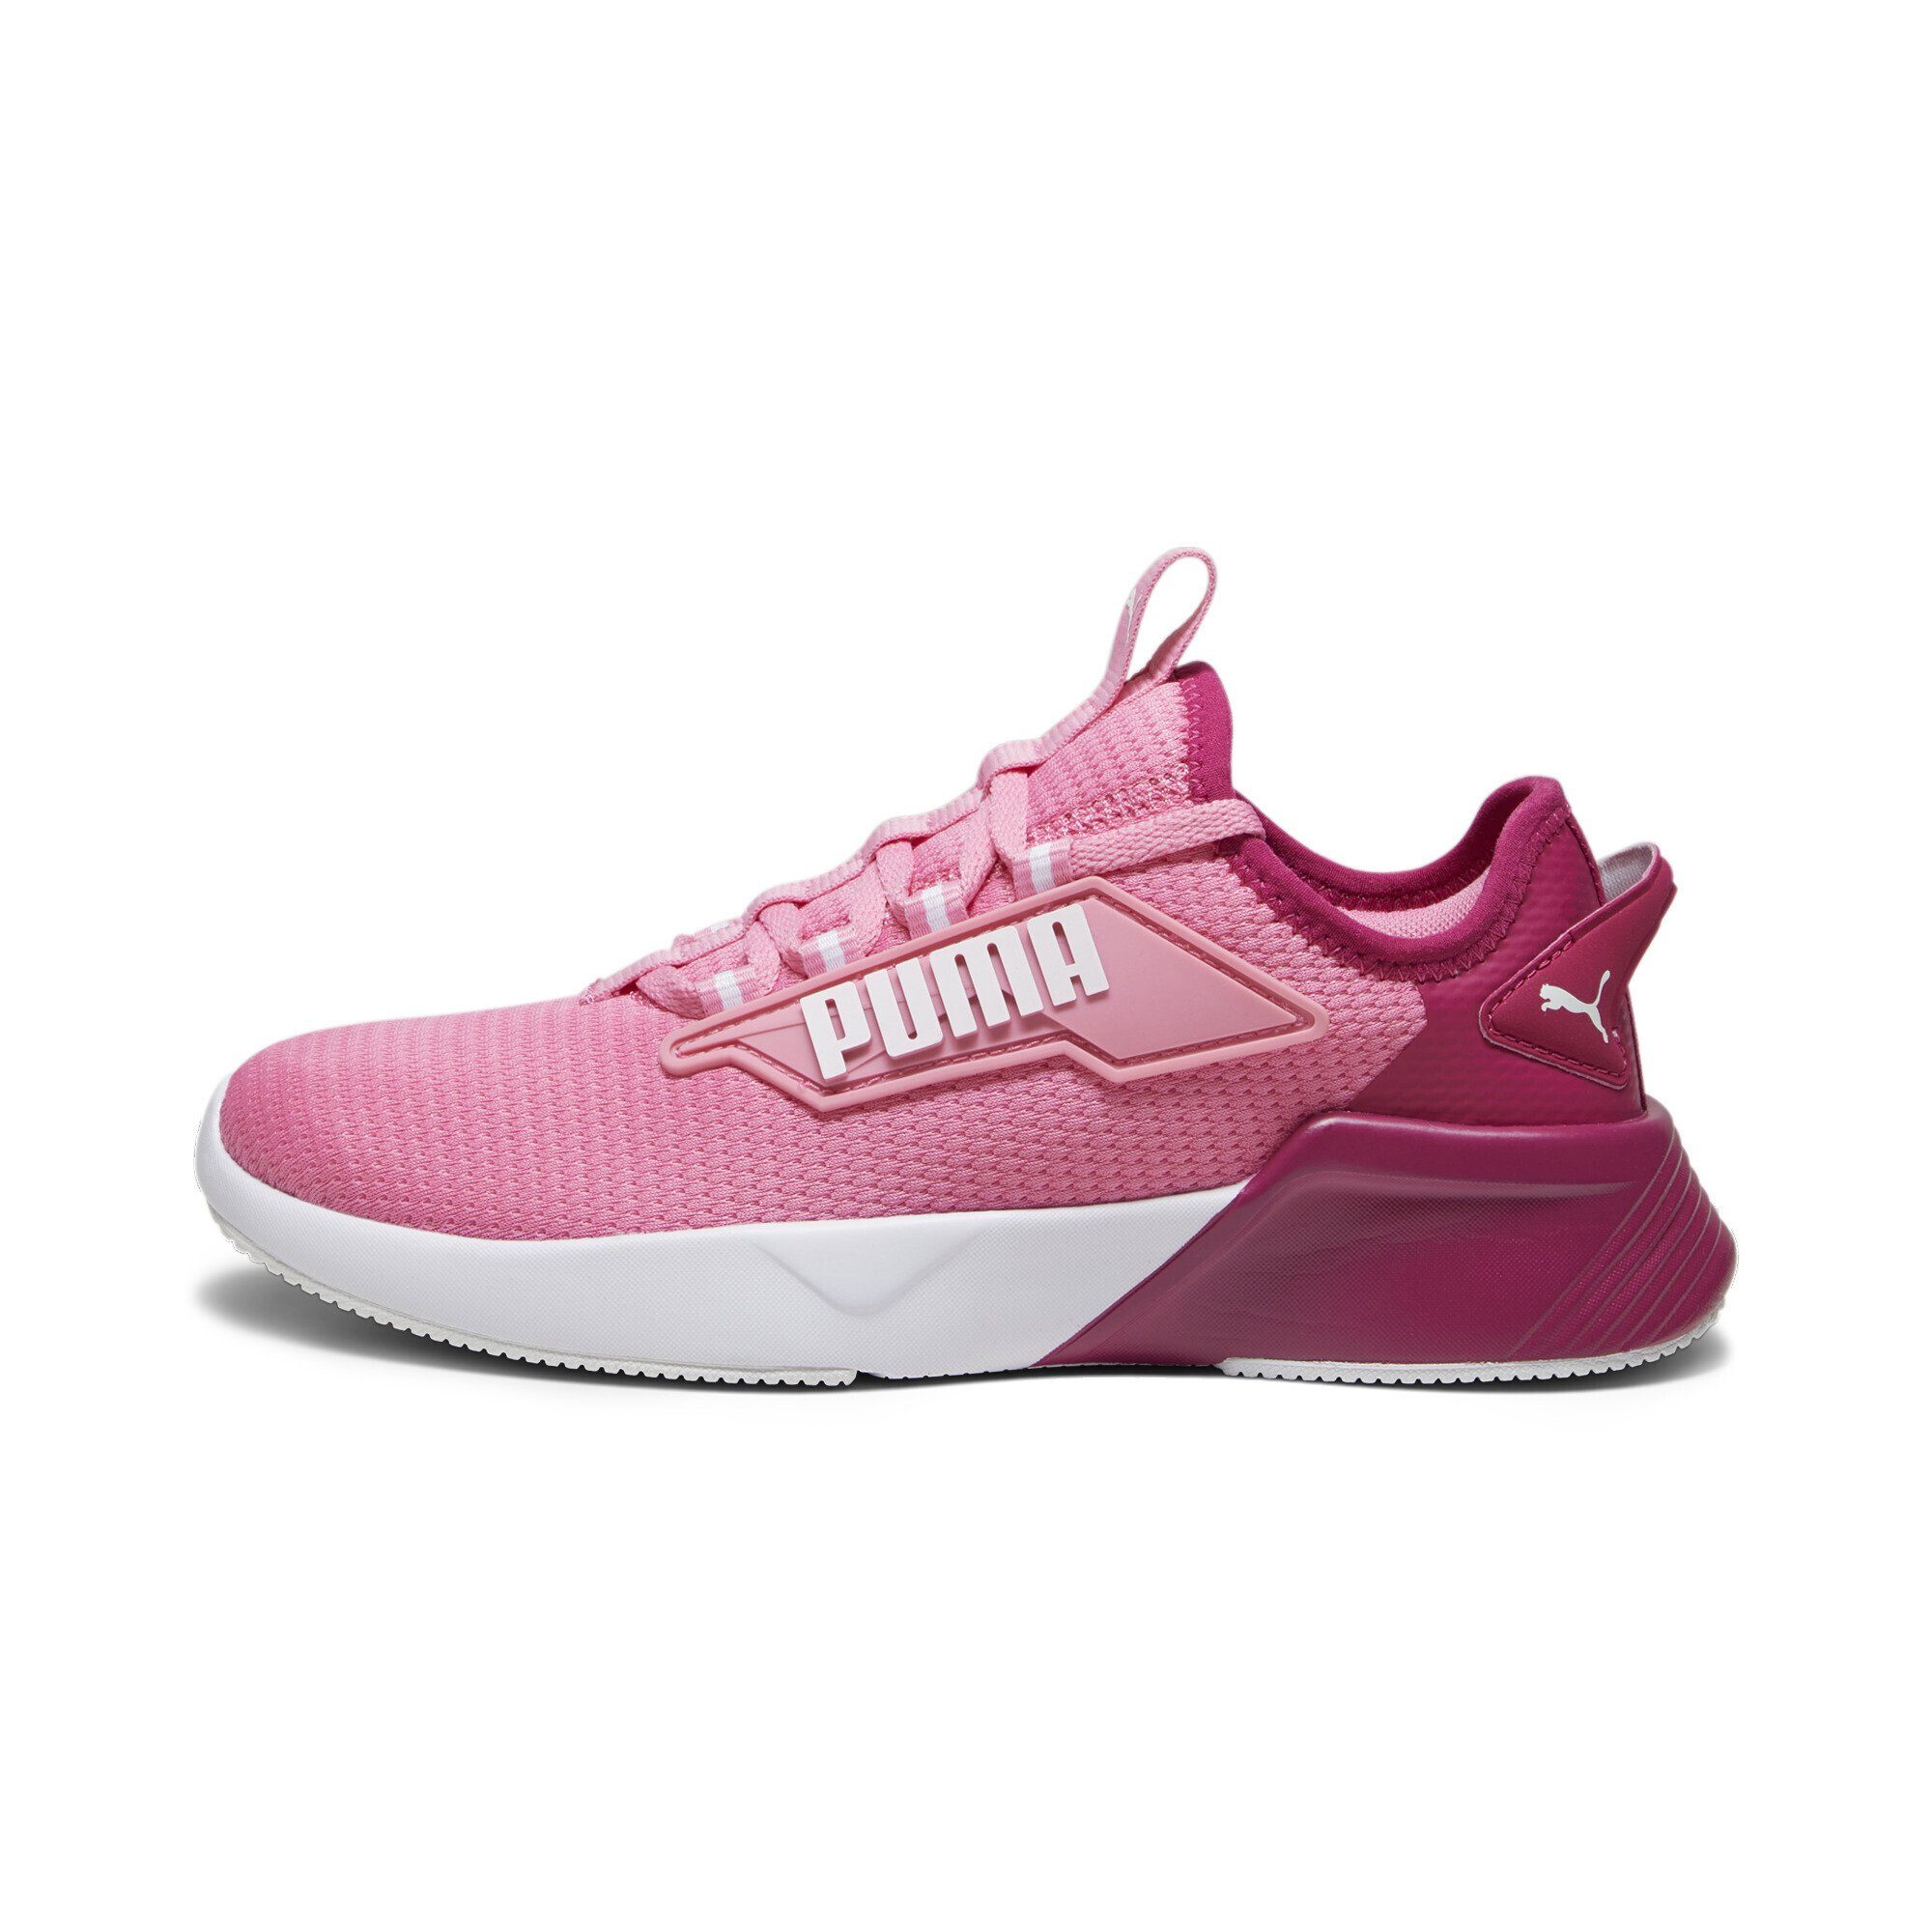 Pink White 2 PUMA Jugendliche Strawberry Laufschuh Retaliate Burst Pinktastic Sneakers